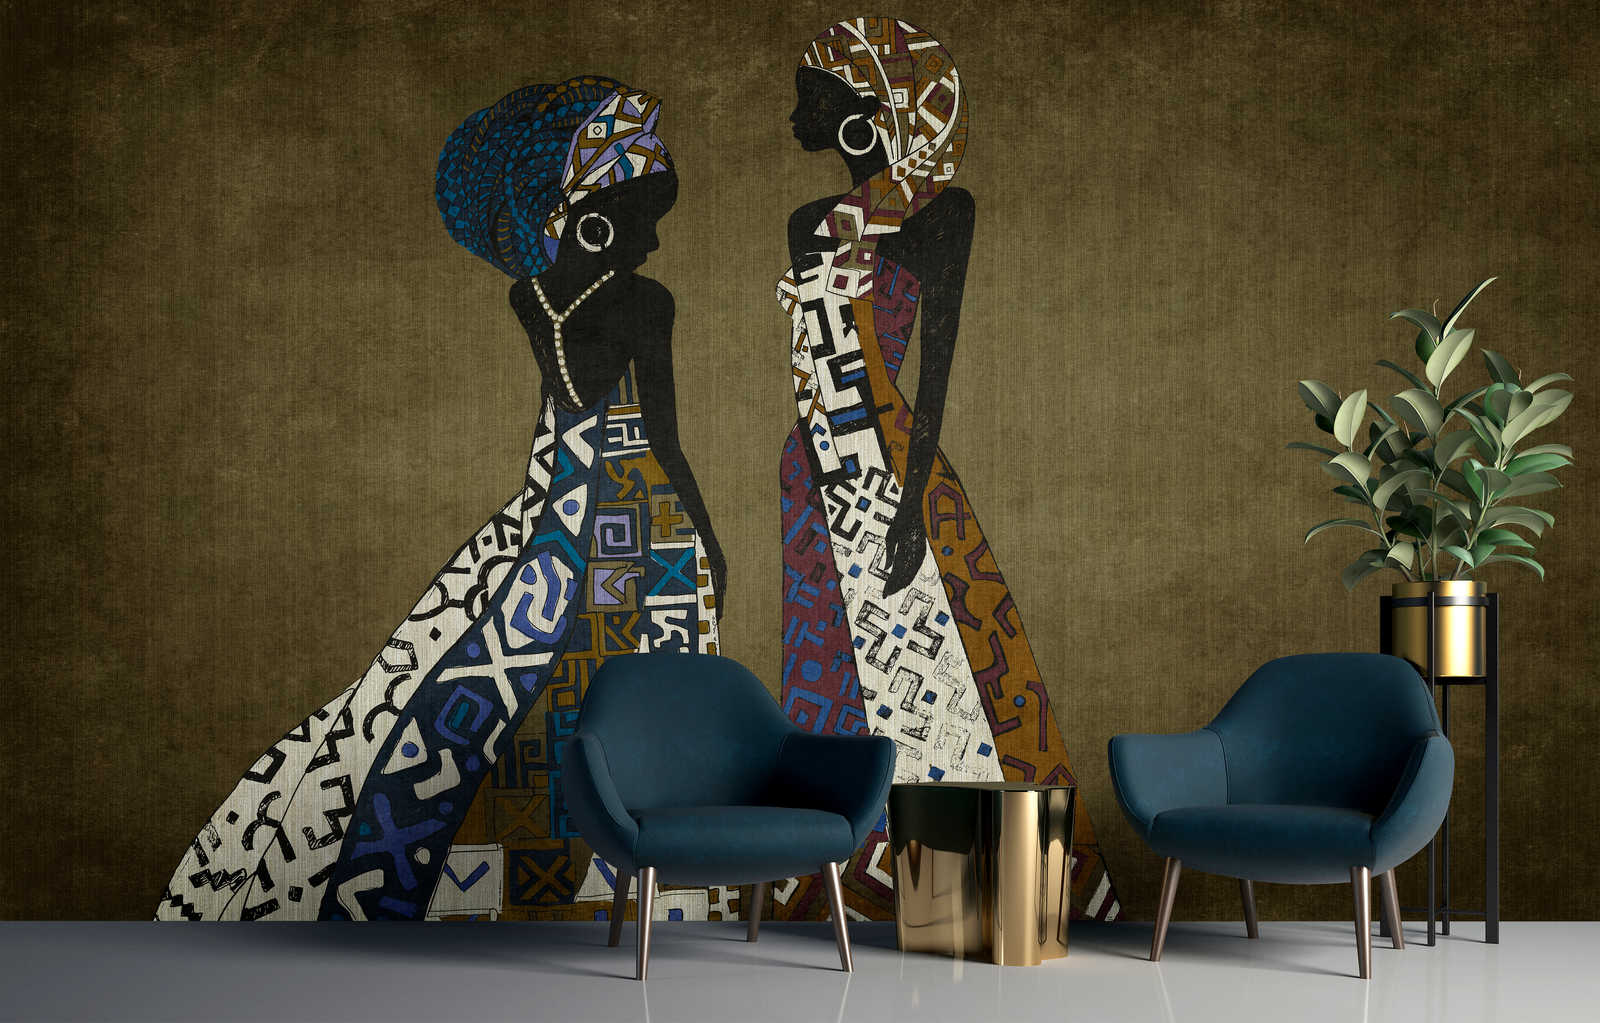             Nairobi 3 - Papier peint africain Dress Design avec motifs ethniques
        